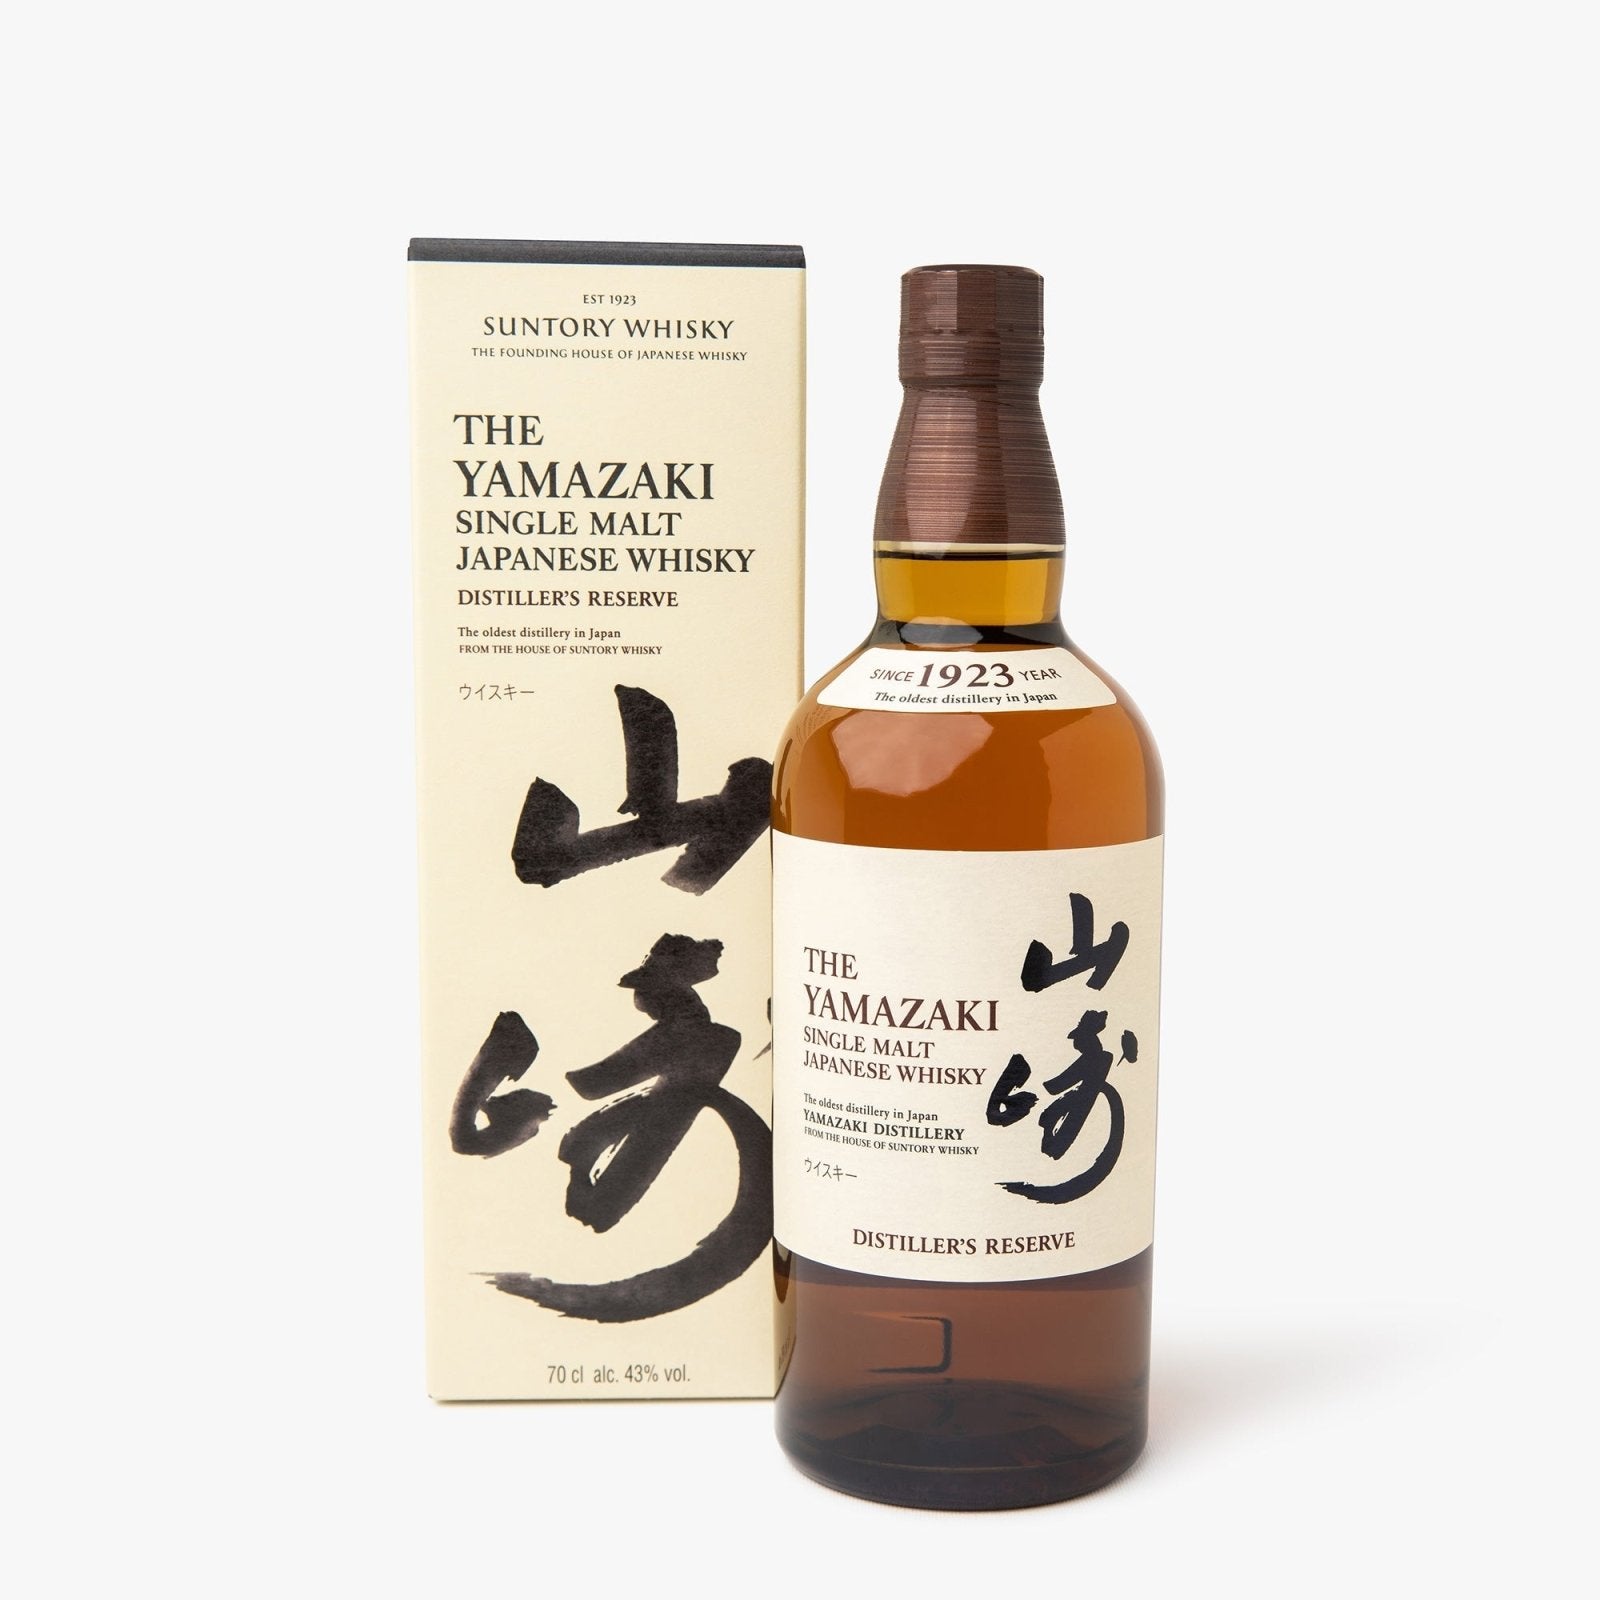 Whisky yamazaki distiller's reserve - 43° - Suntory - iRASSHAi